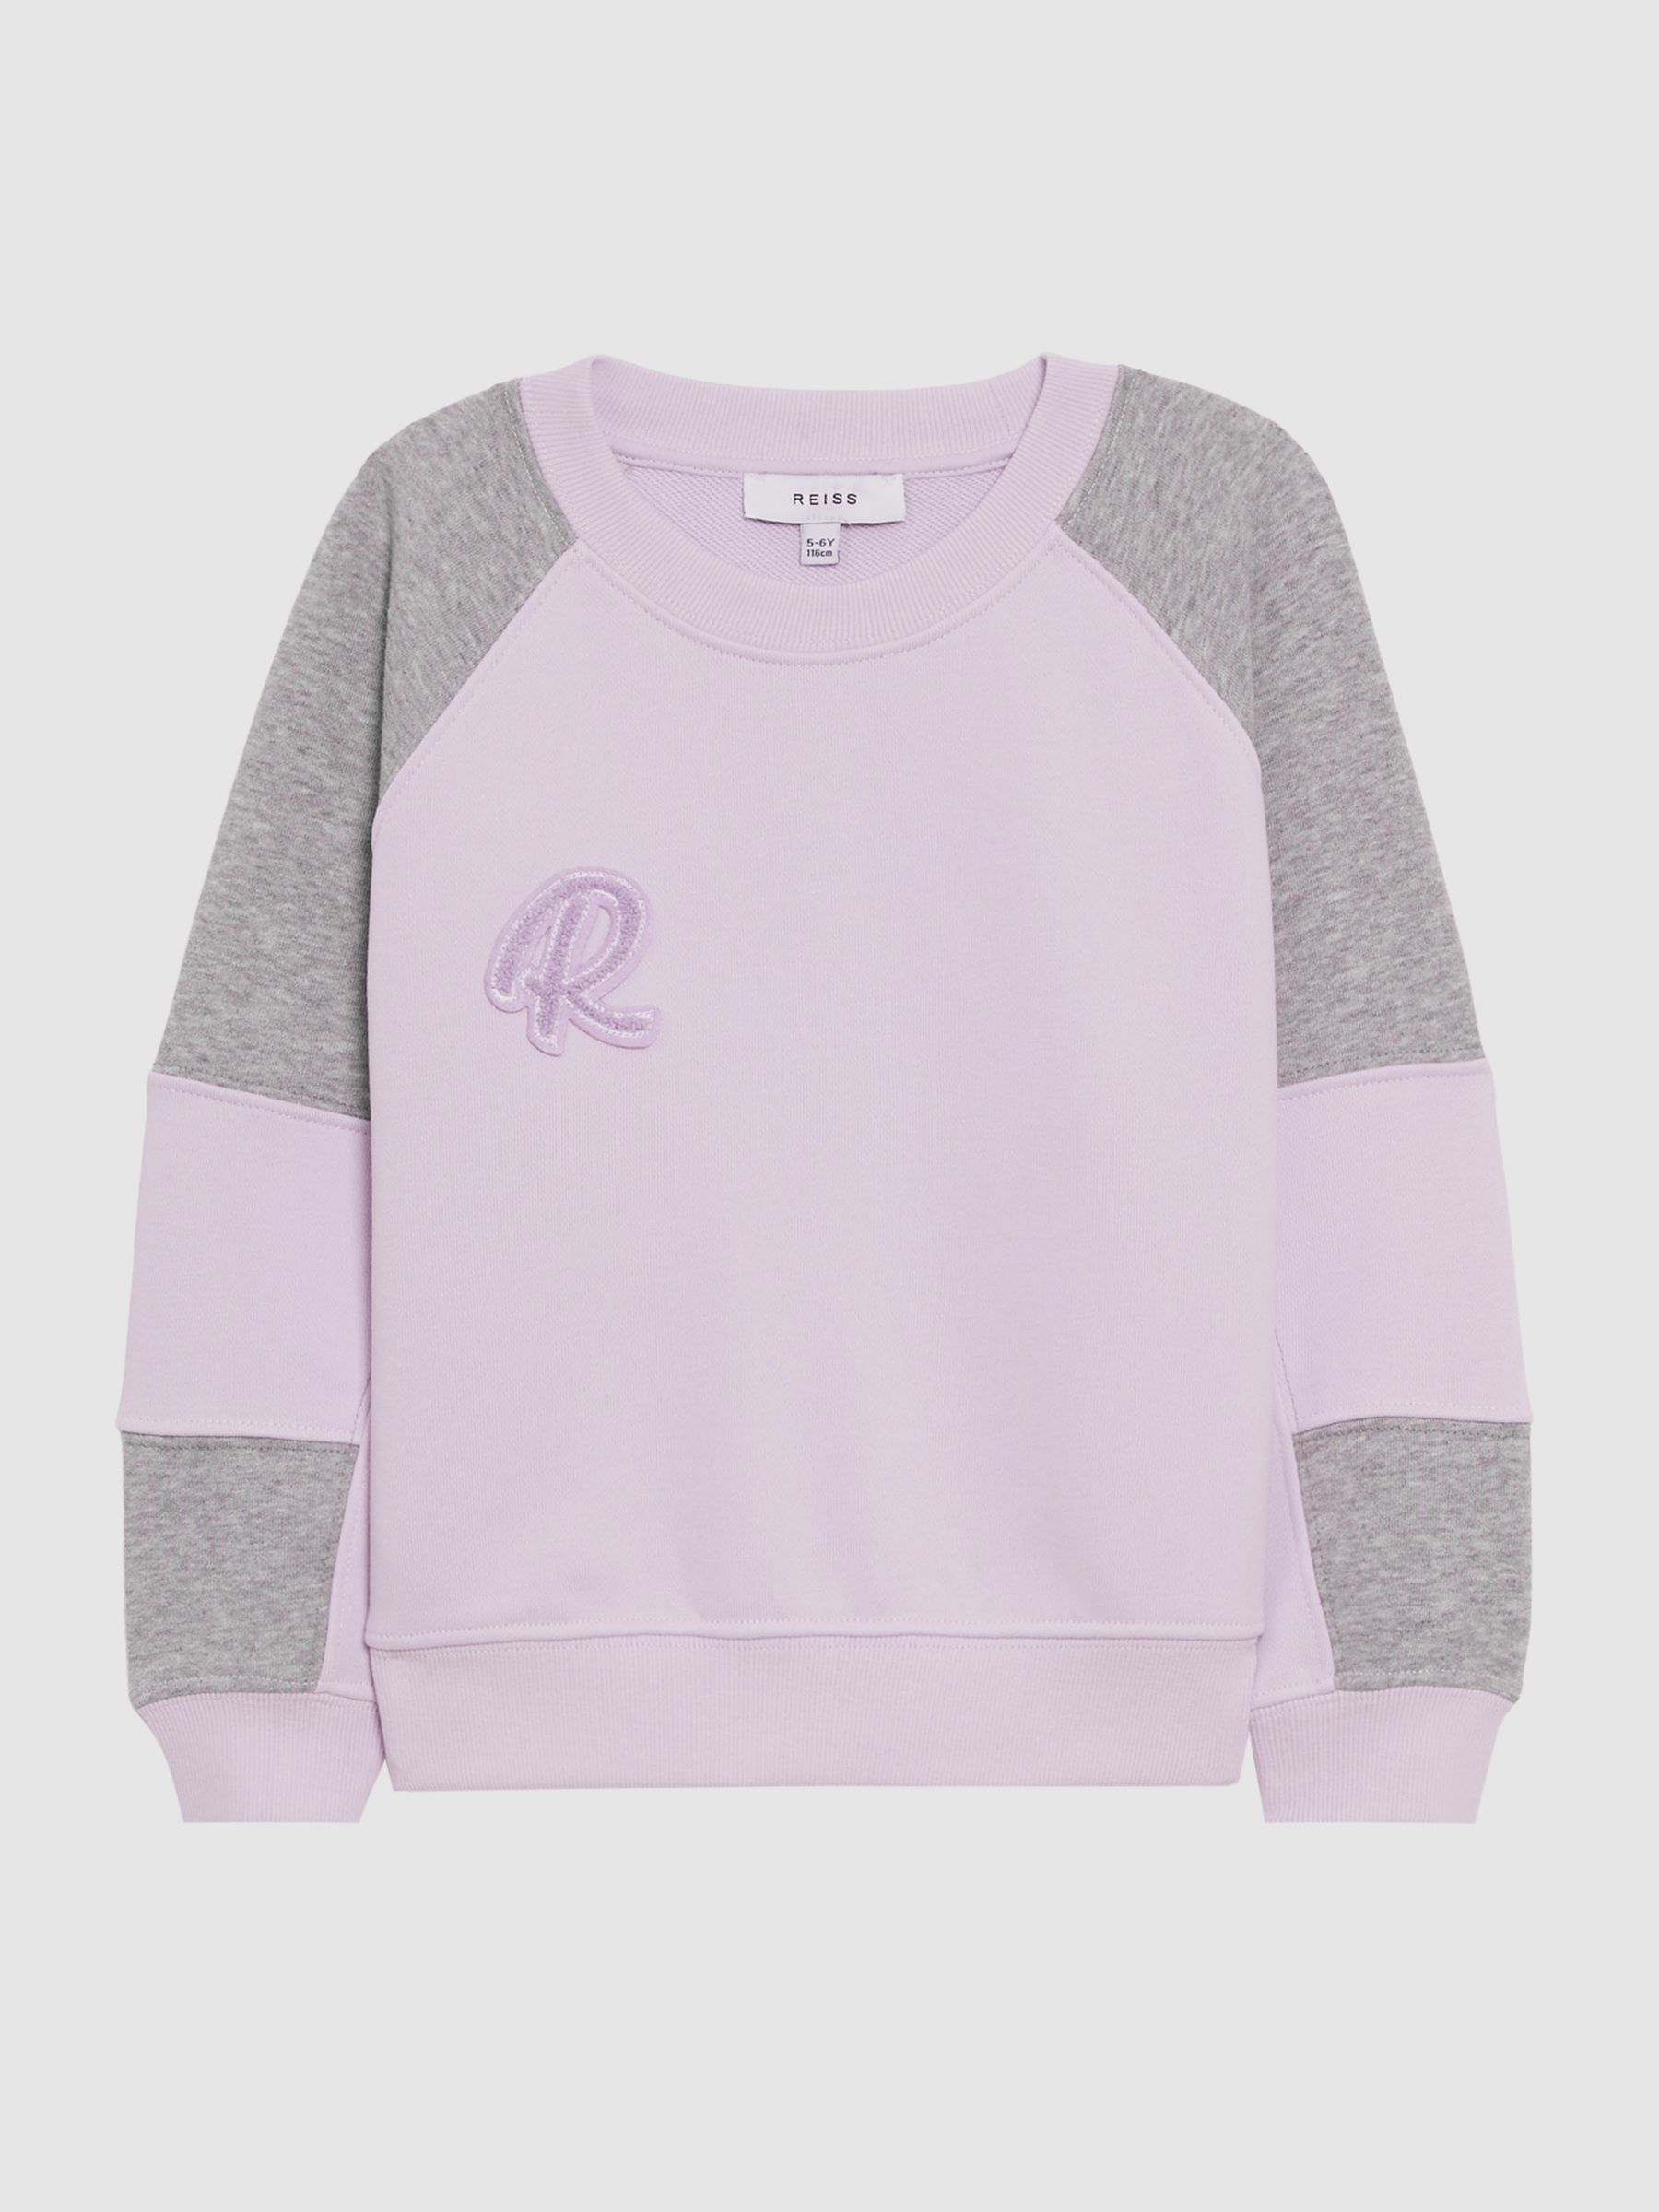 Reiss Bryce Colourblock Motif Jersey Sweatshirt - REISS